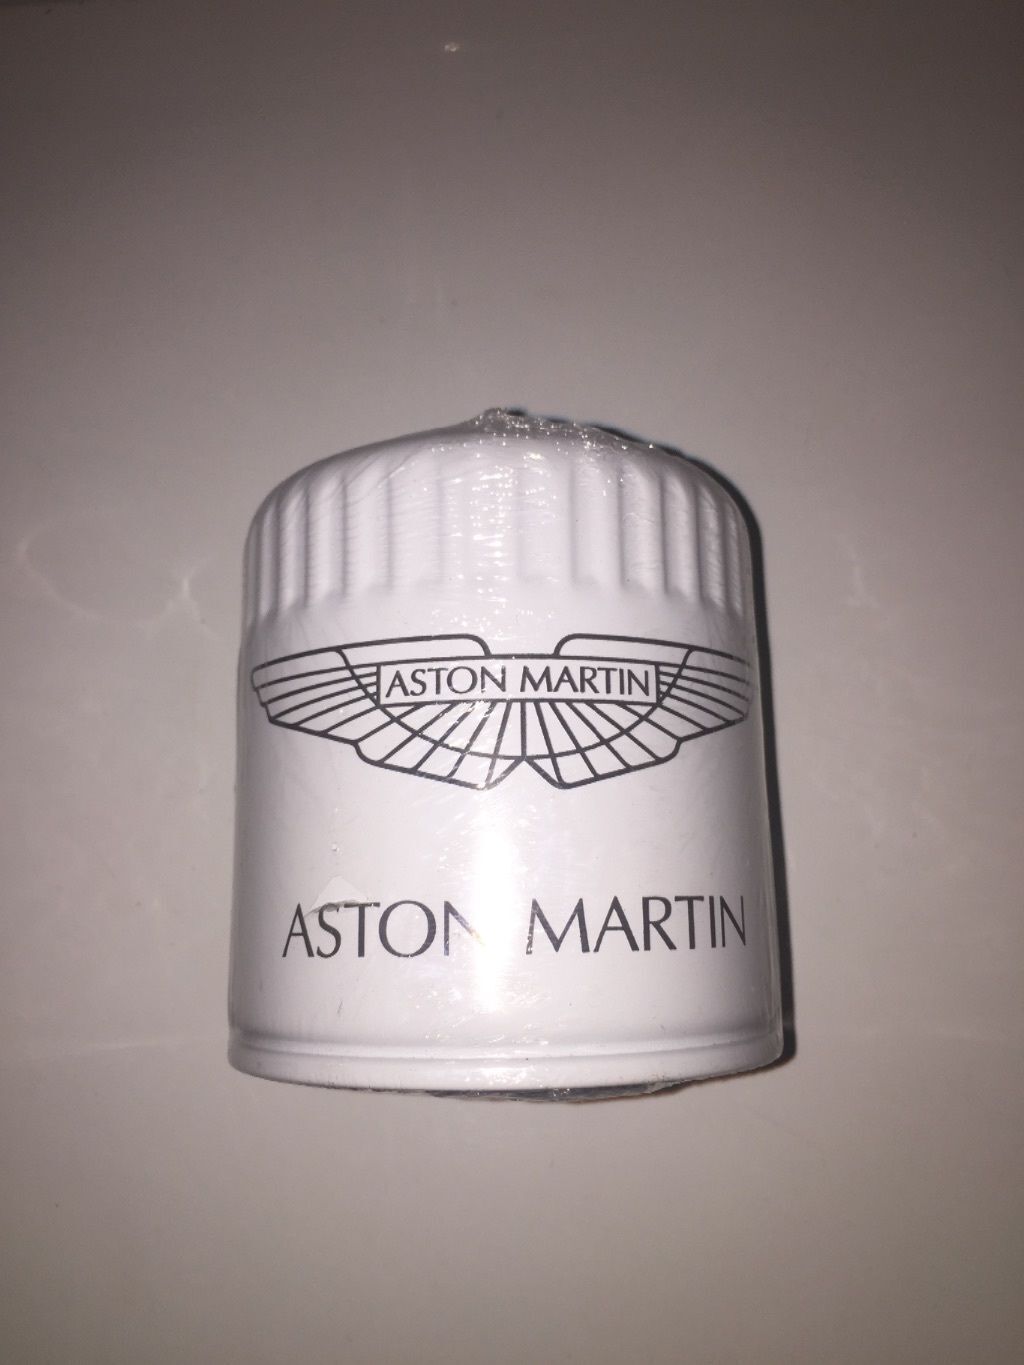 Aston Martin Oil Filter AG43-6714-AA - fits V12 DB7, DB9, DBS, Vanquish, etc.